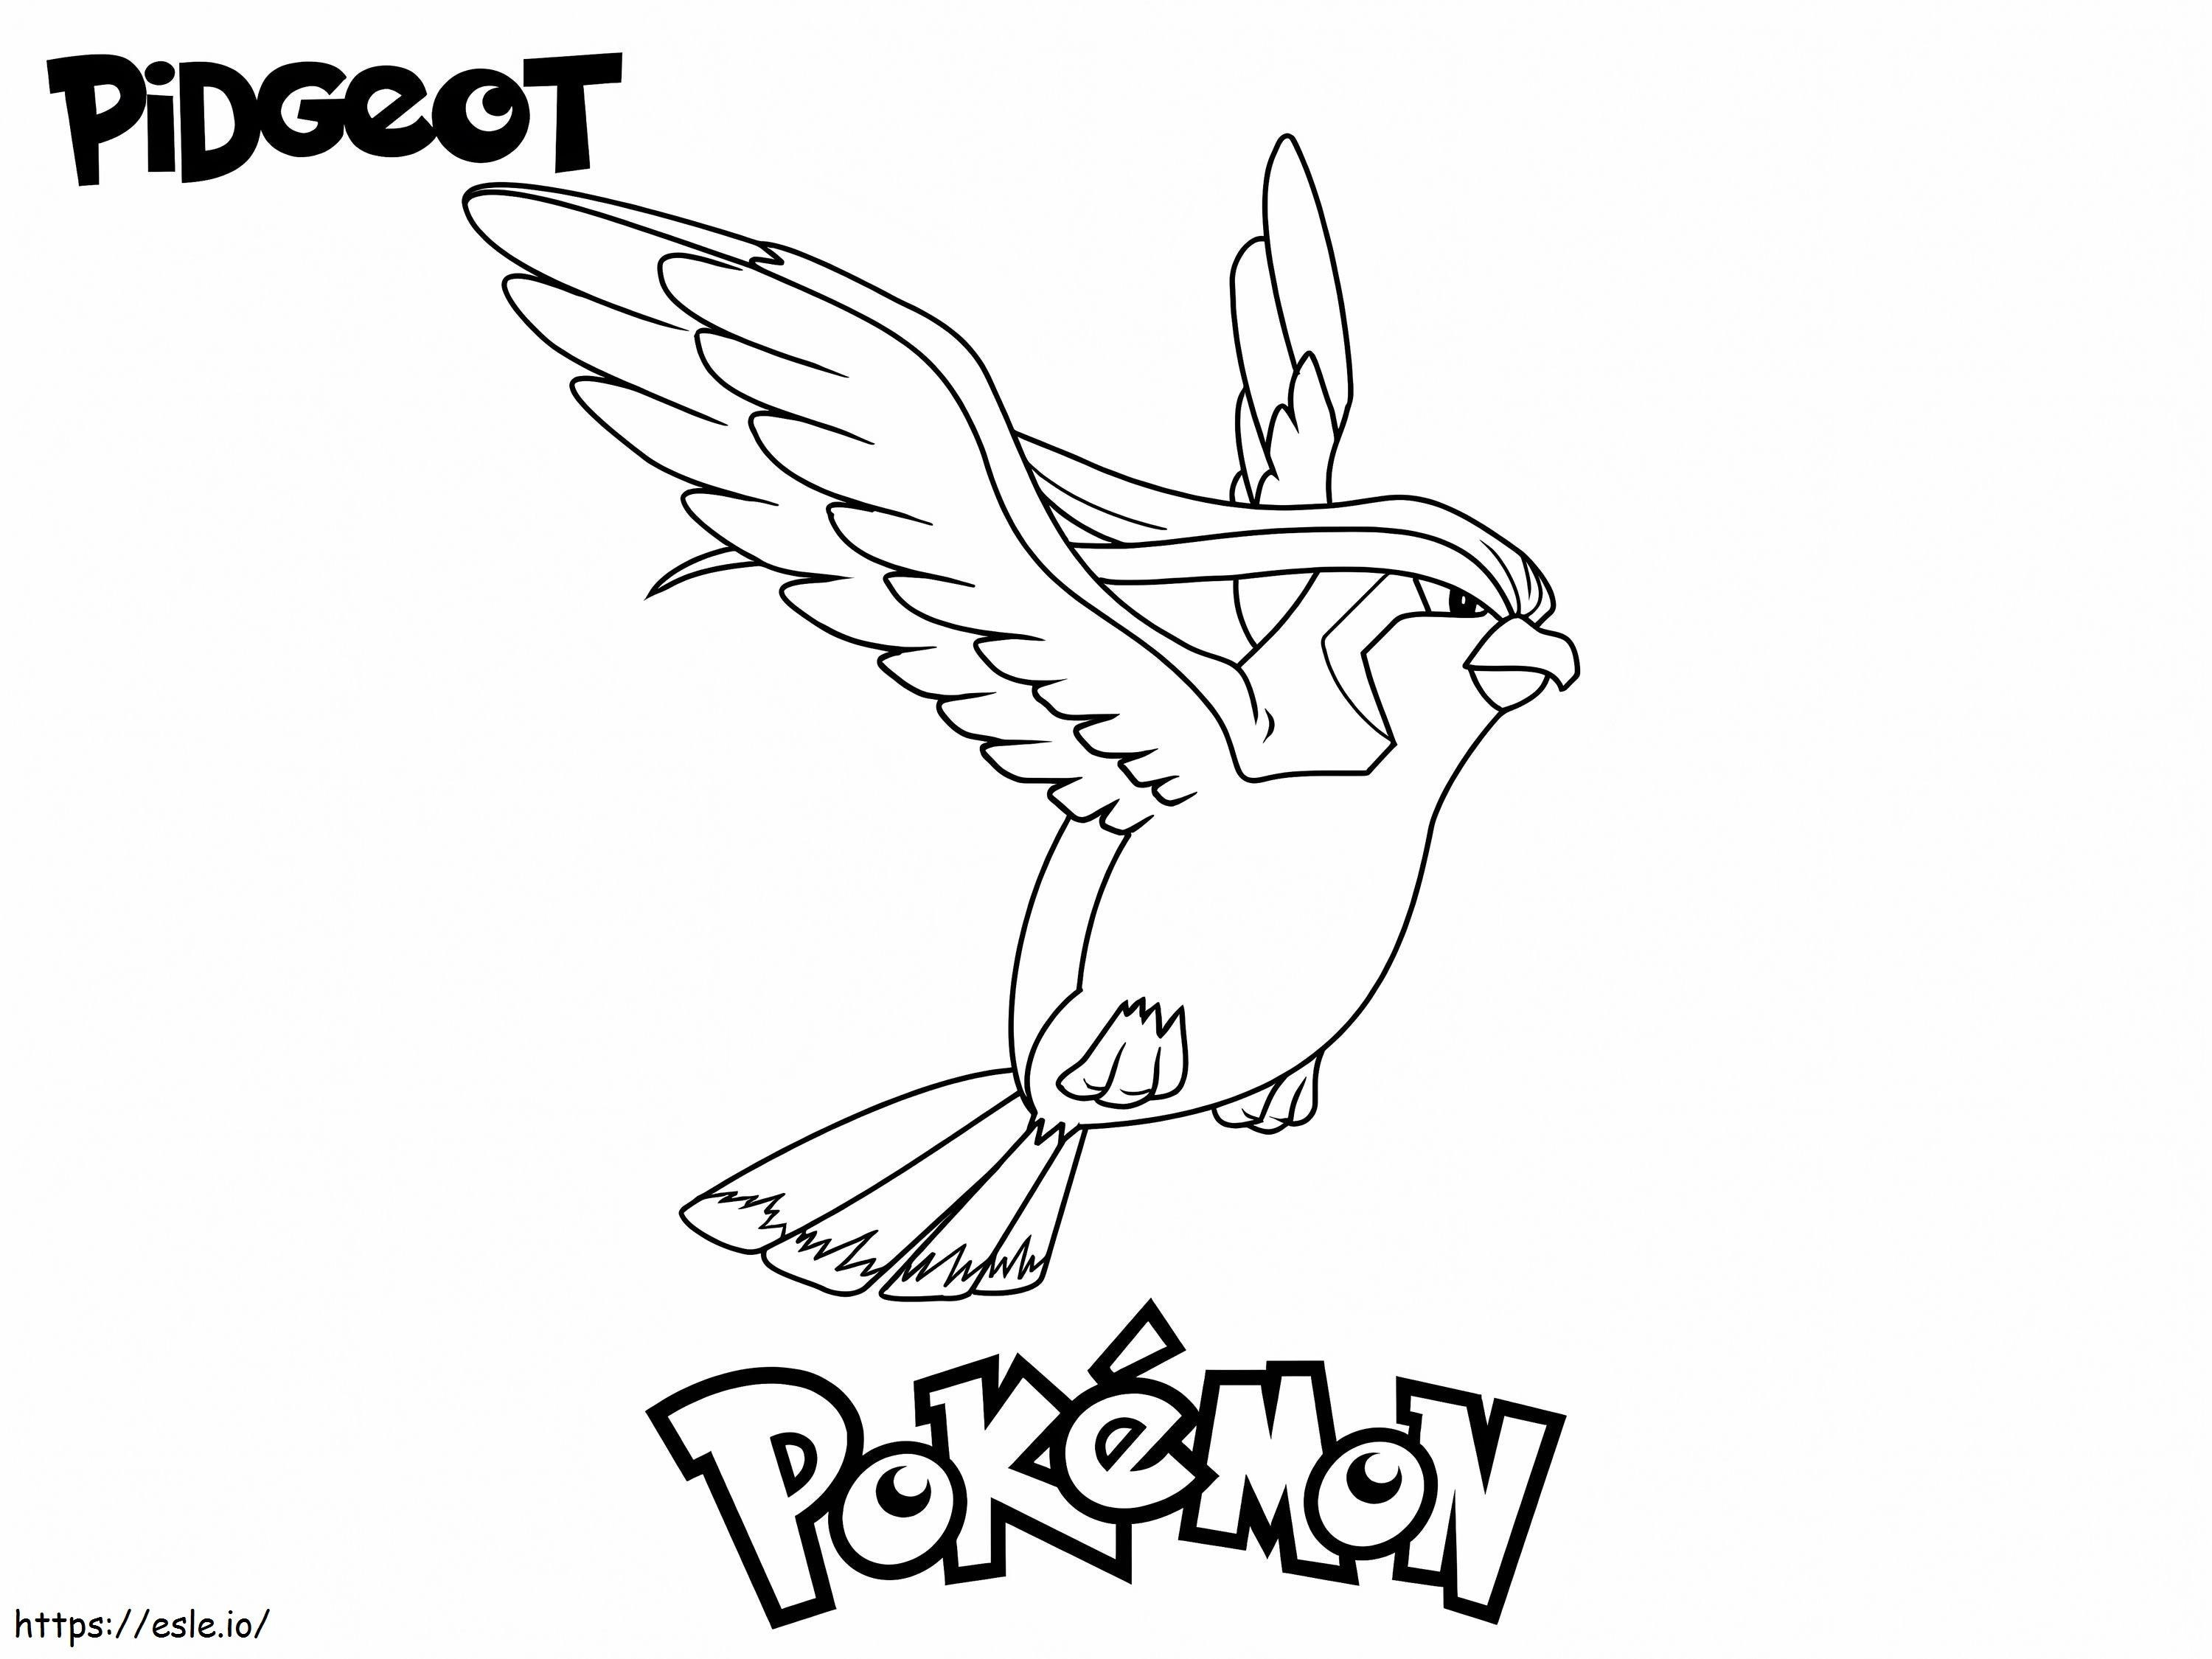 Pidgeot Pokemon coloring page